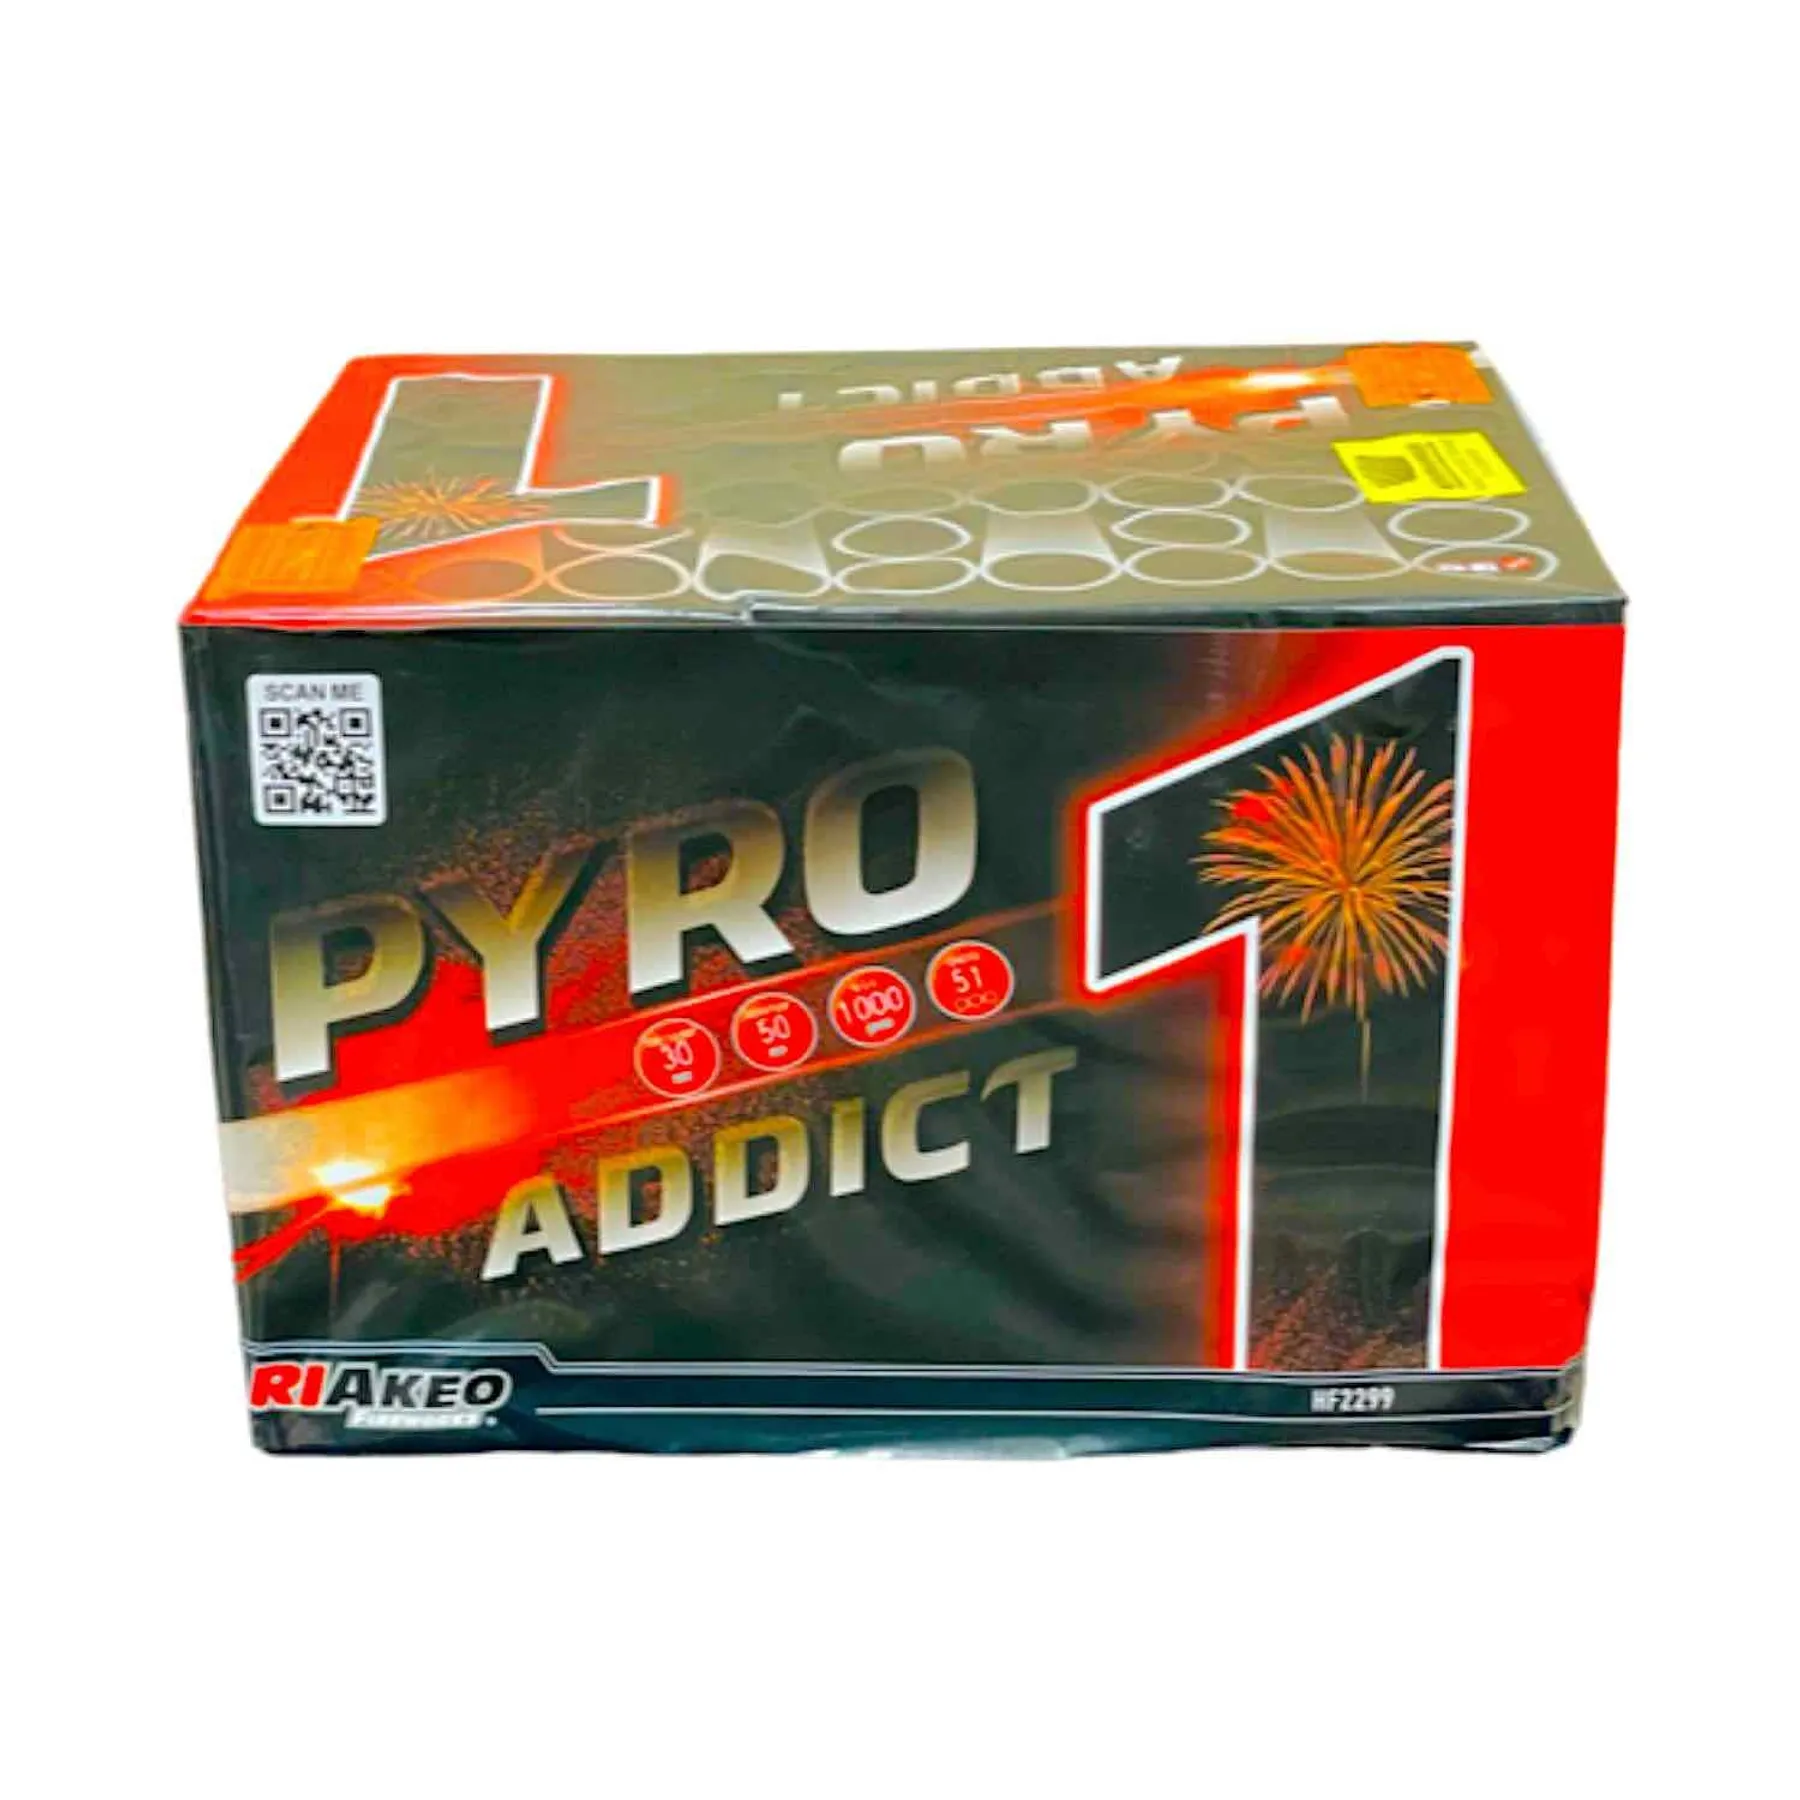 Pyro Addict 1 Riakeo Manchester Fireworks